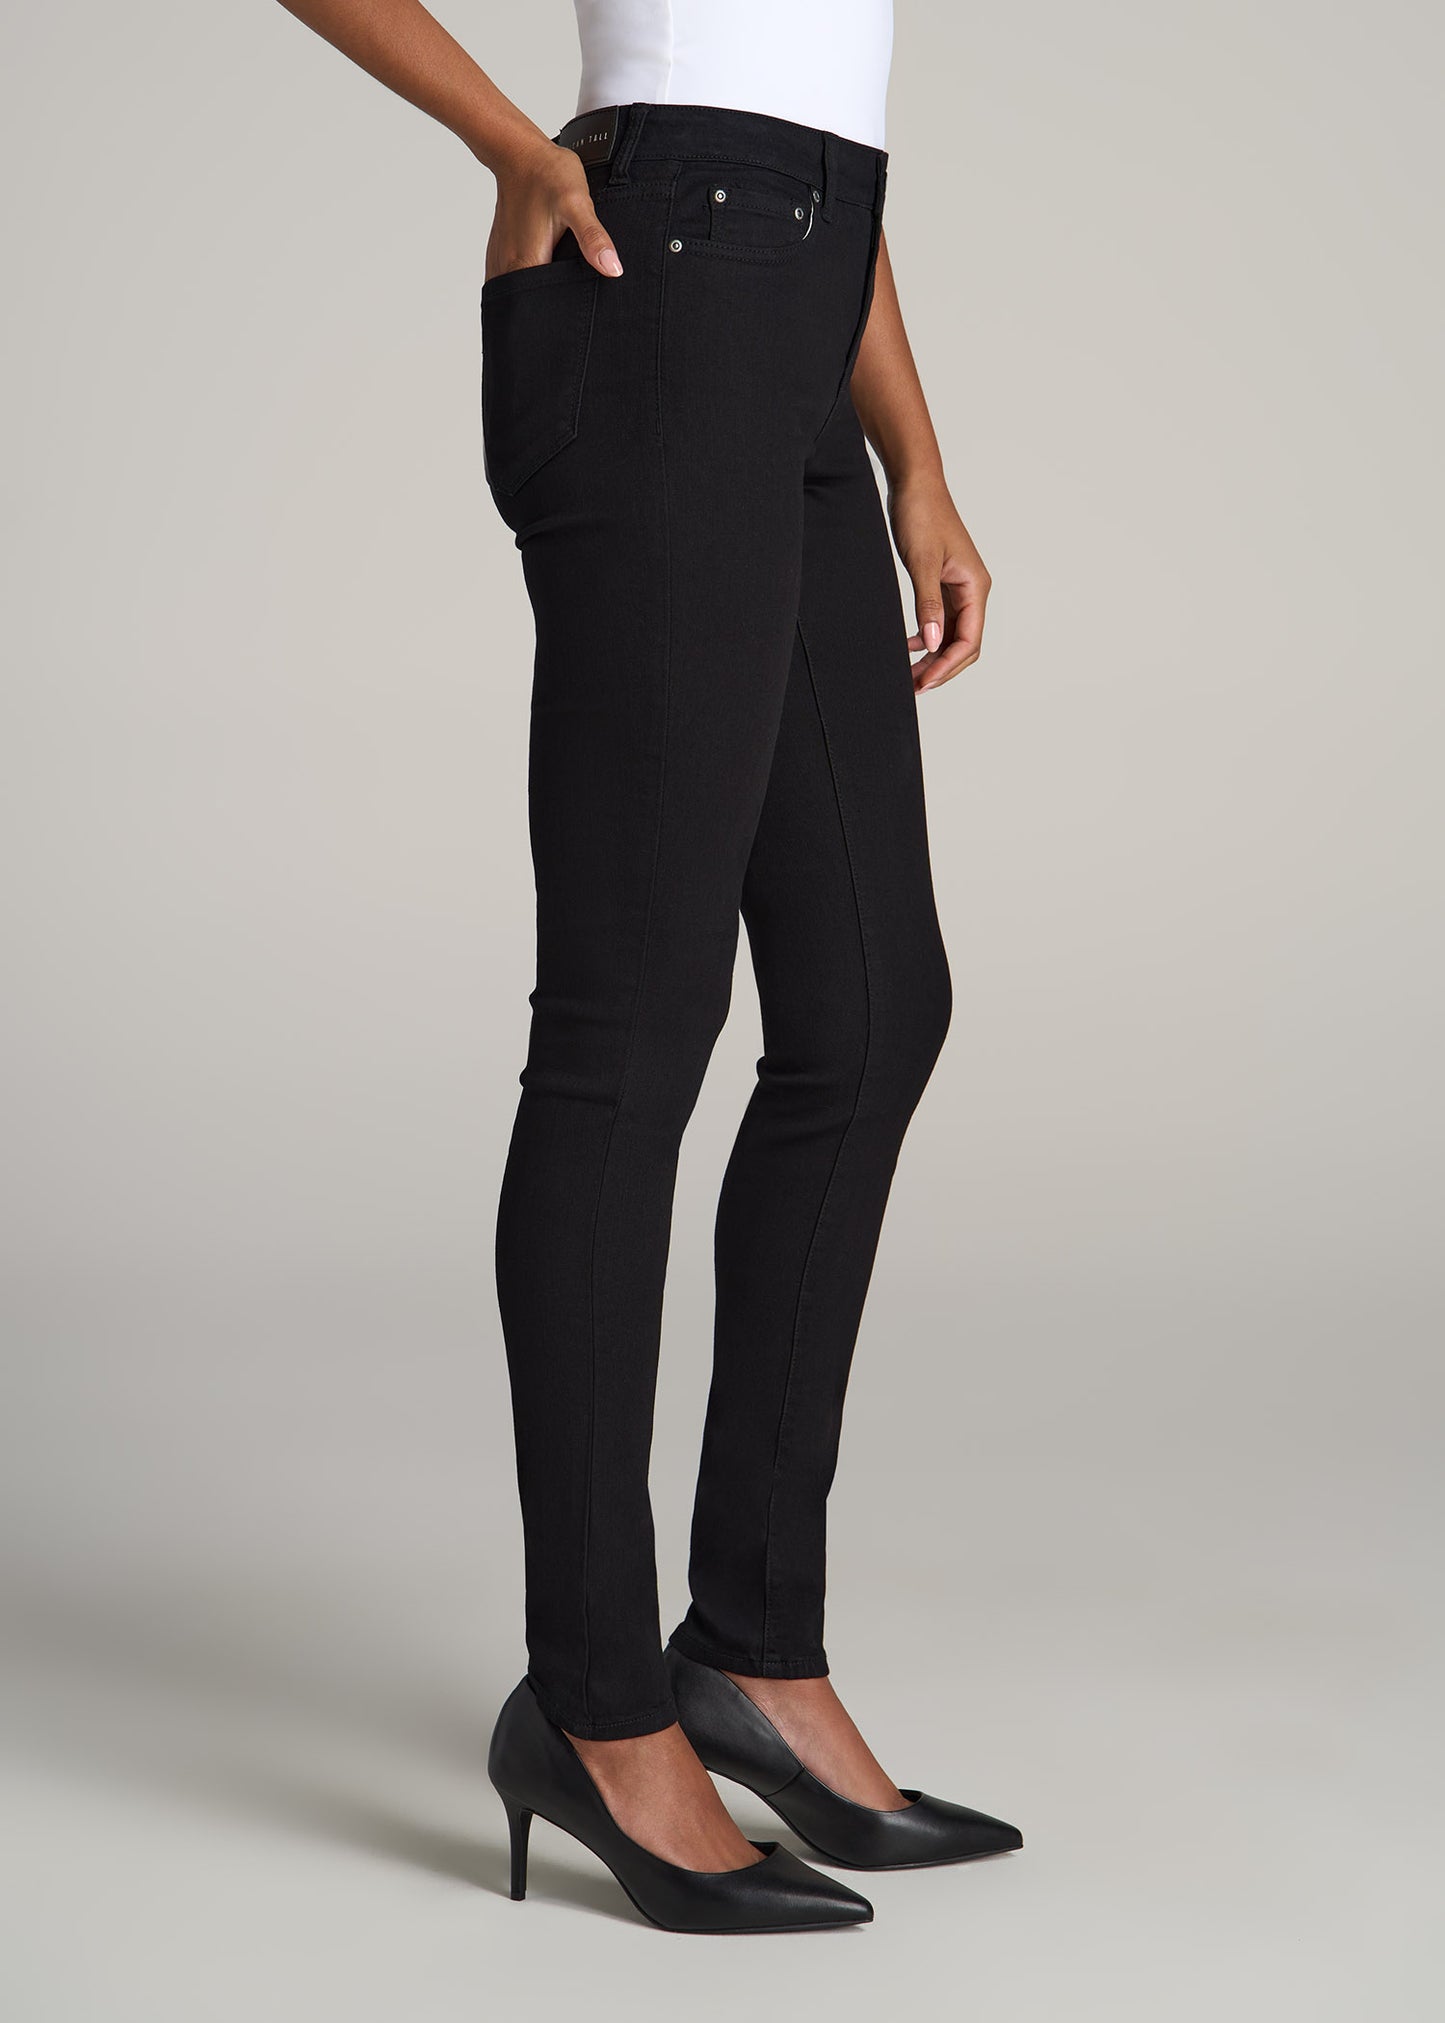 Sarah MID RISE SKINNY Tall Women's Jean in Black